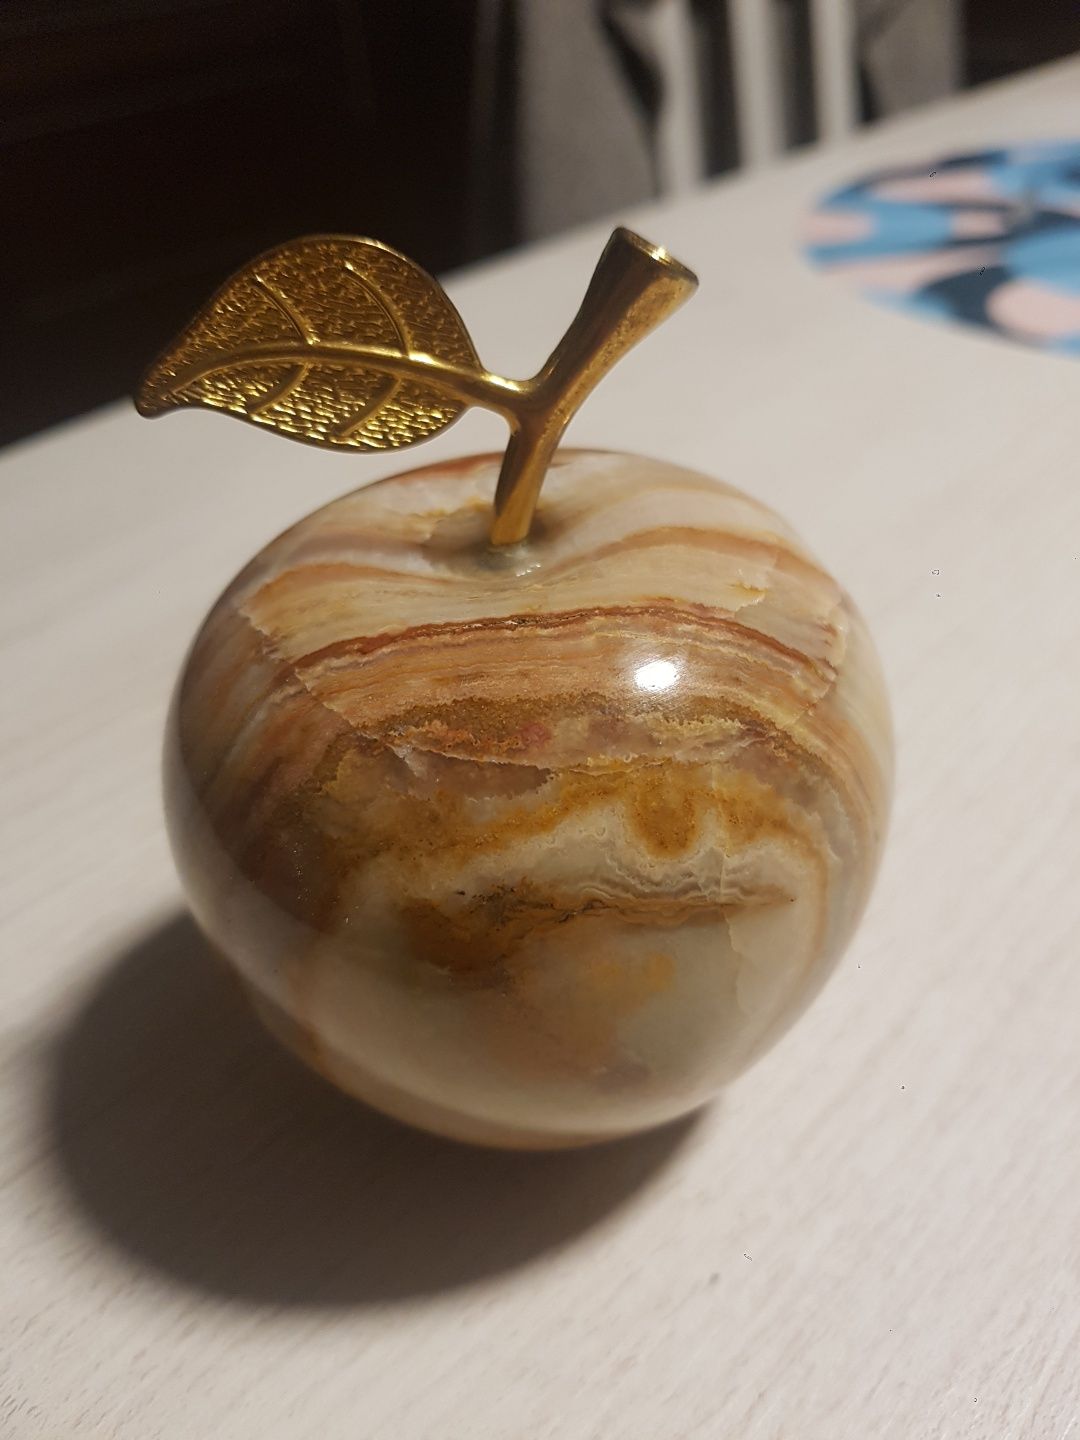 Jaspis jabłko średnica 6 cm